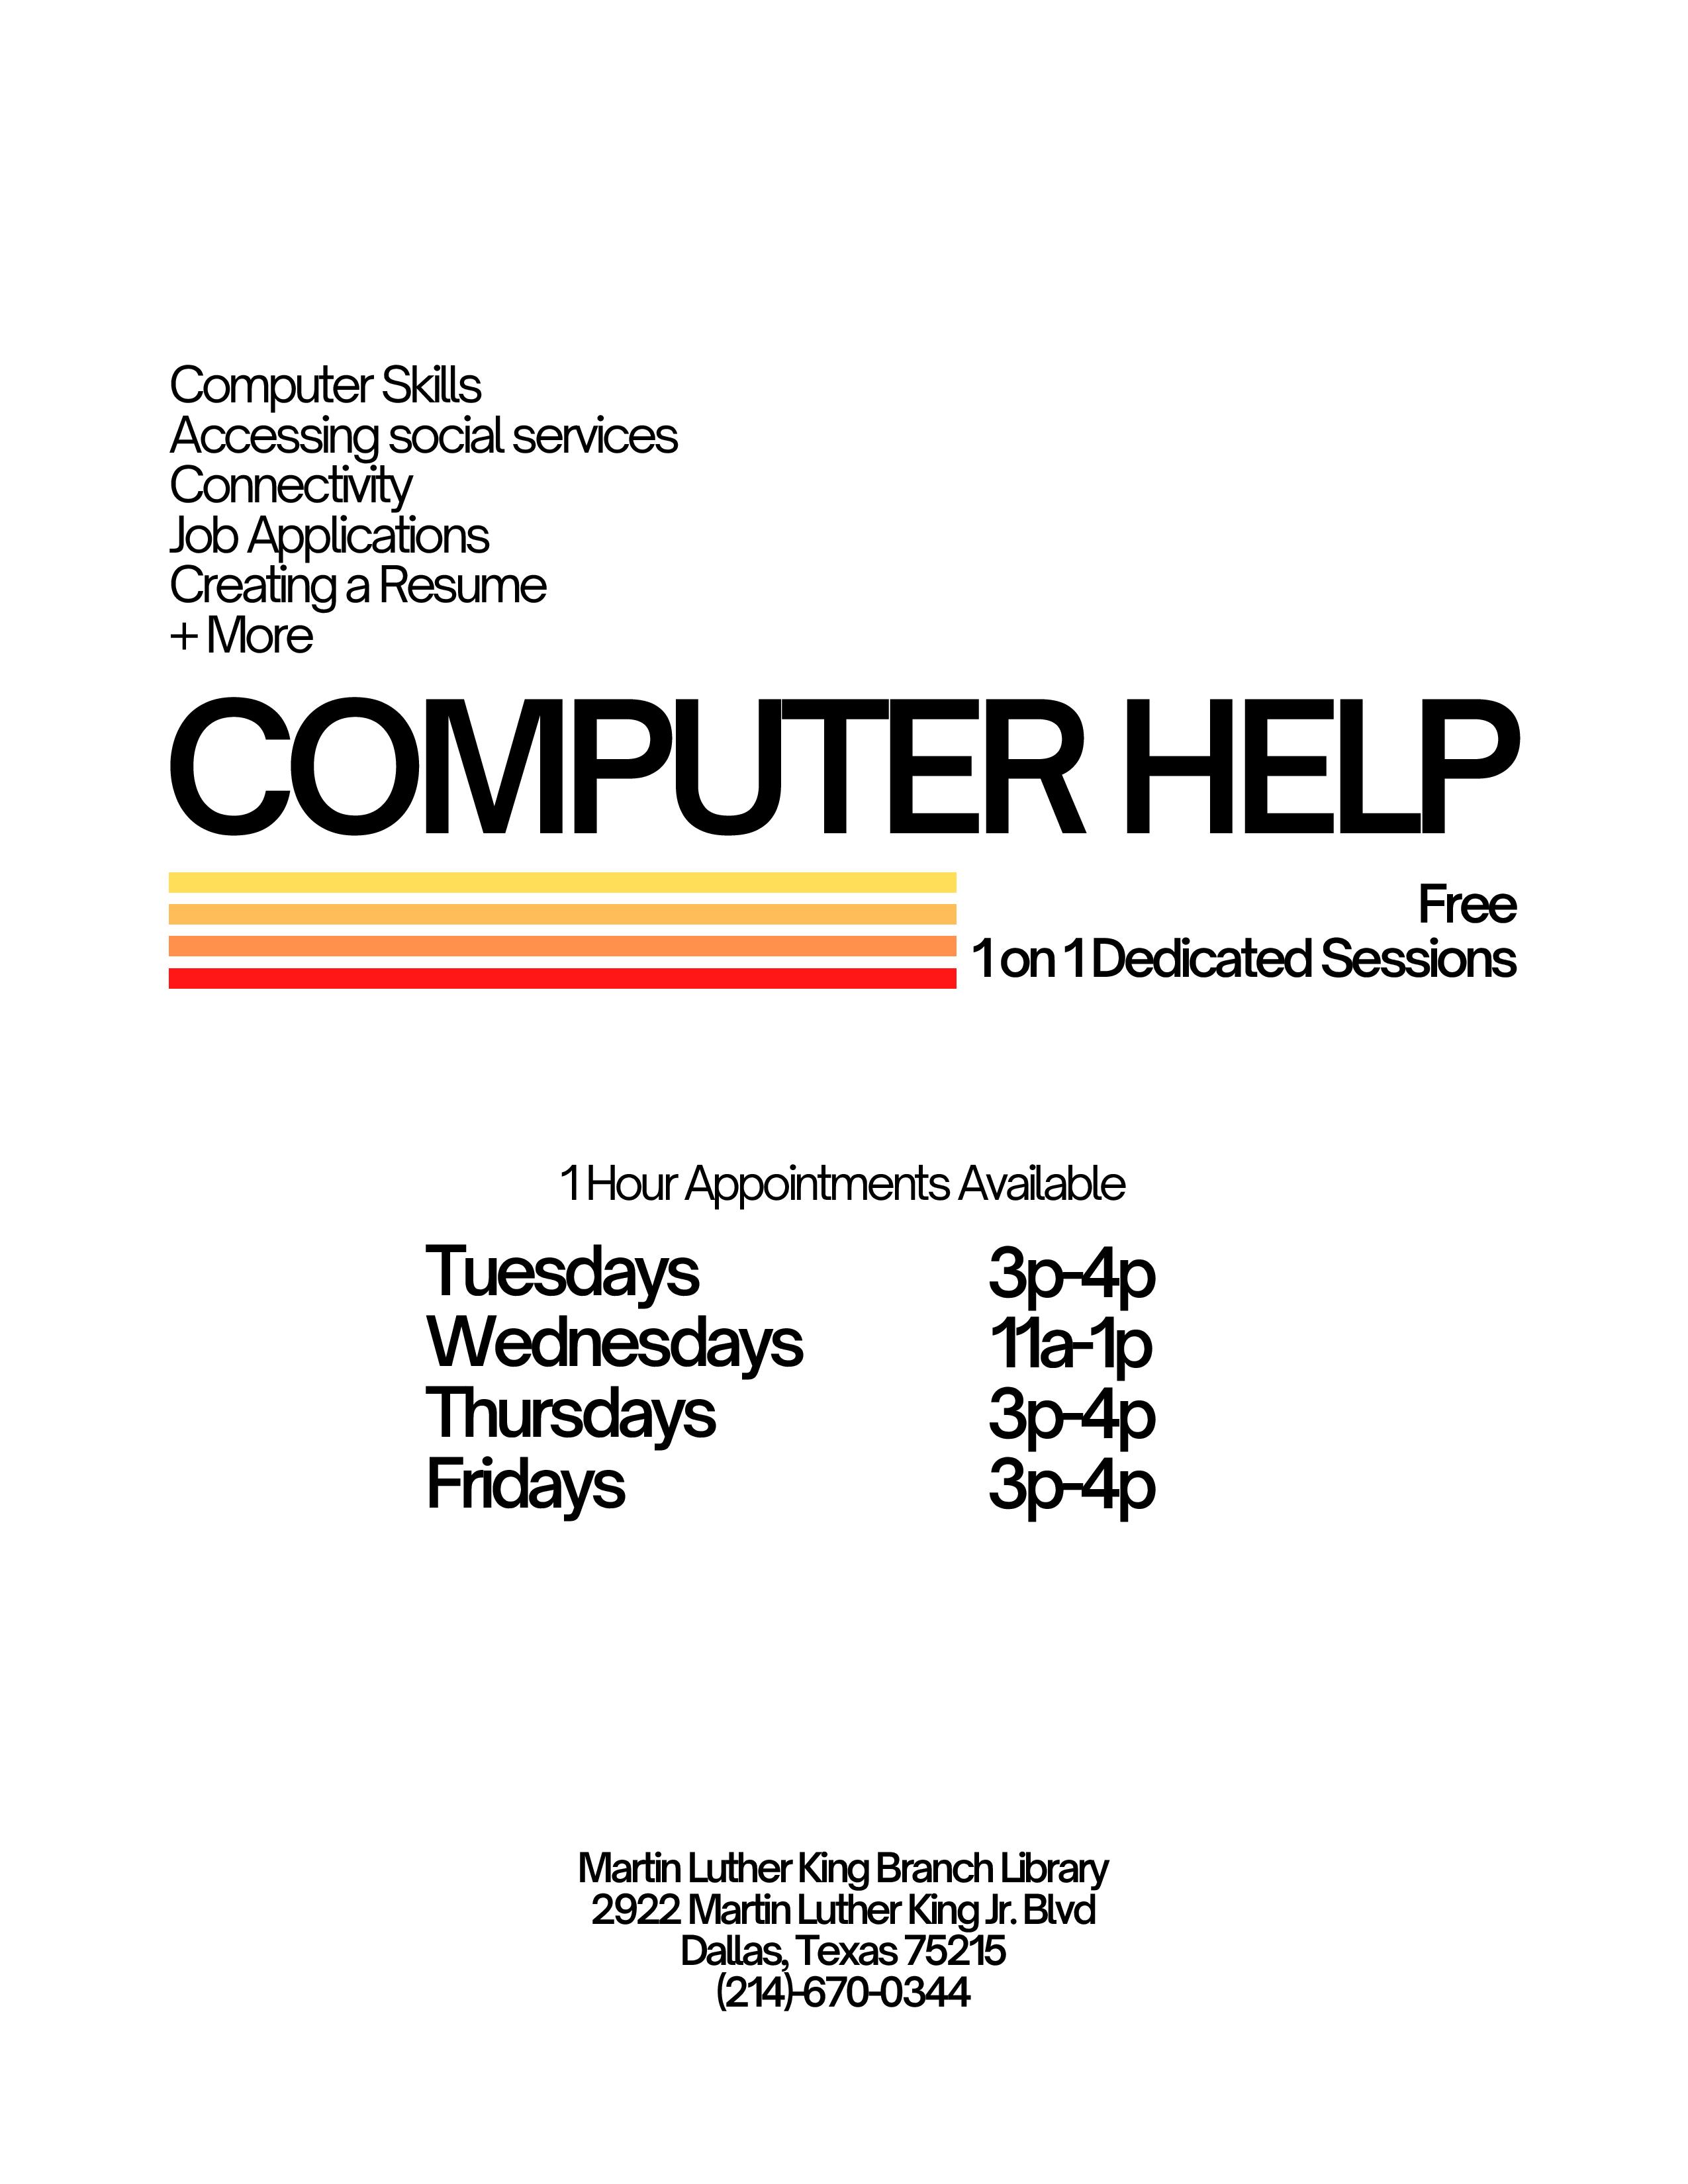 Free Computer Help (MLK Branch Library) @ MLK Branch Library